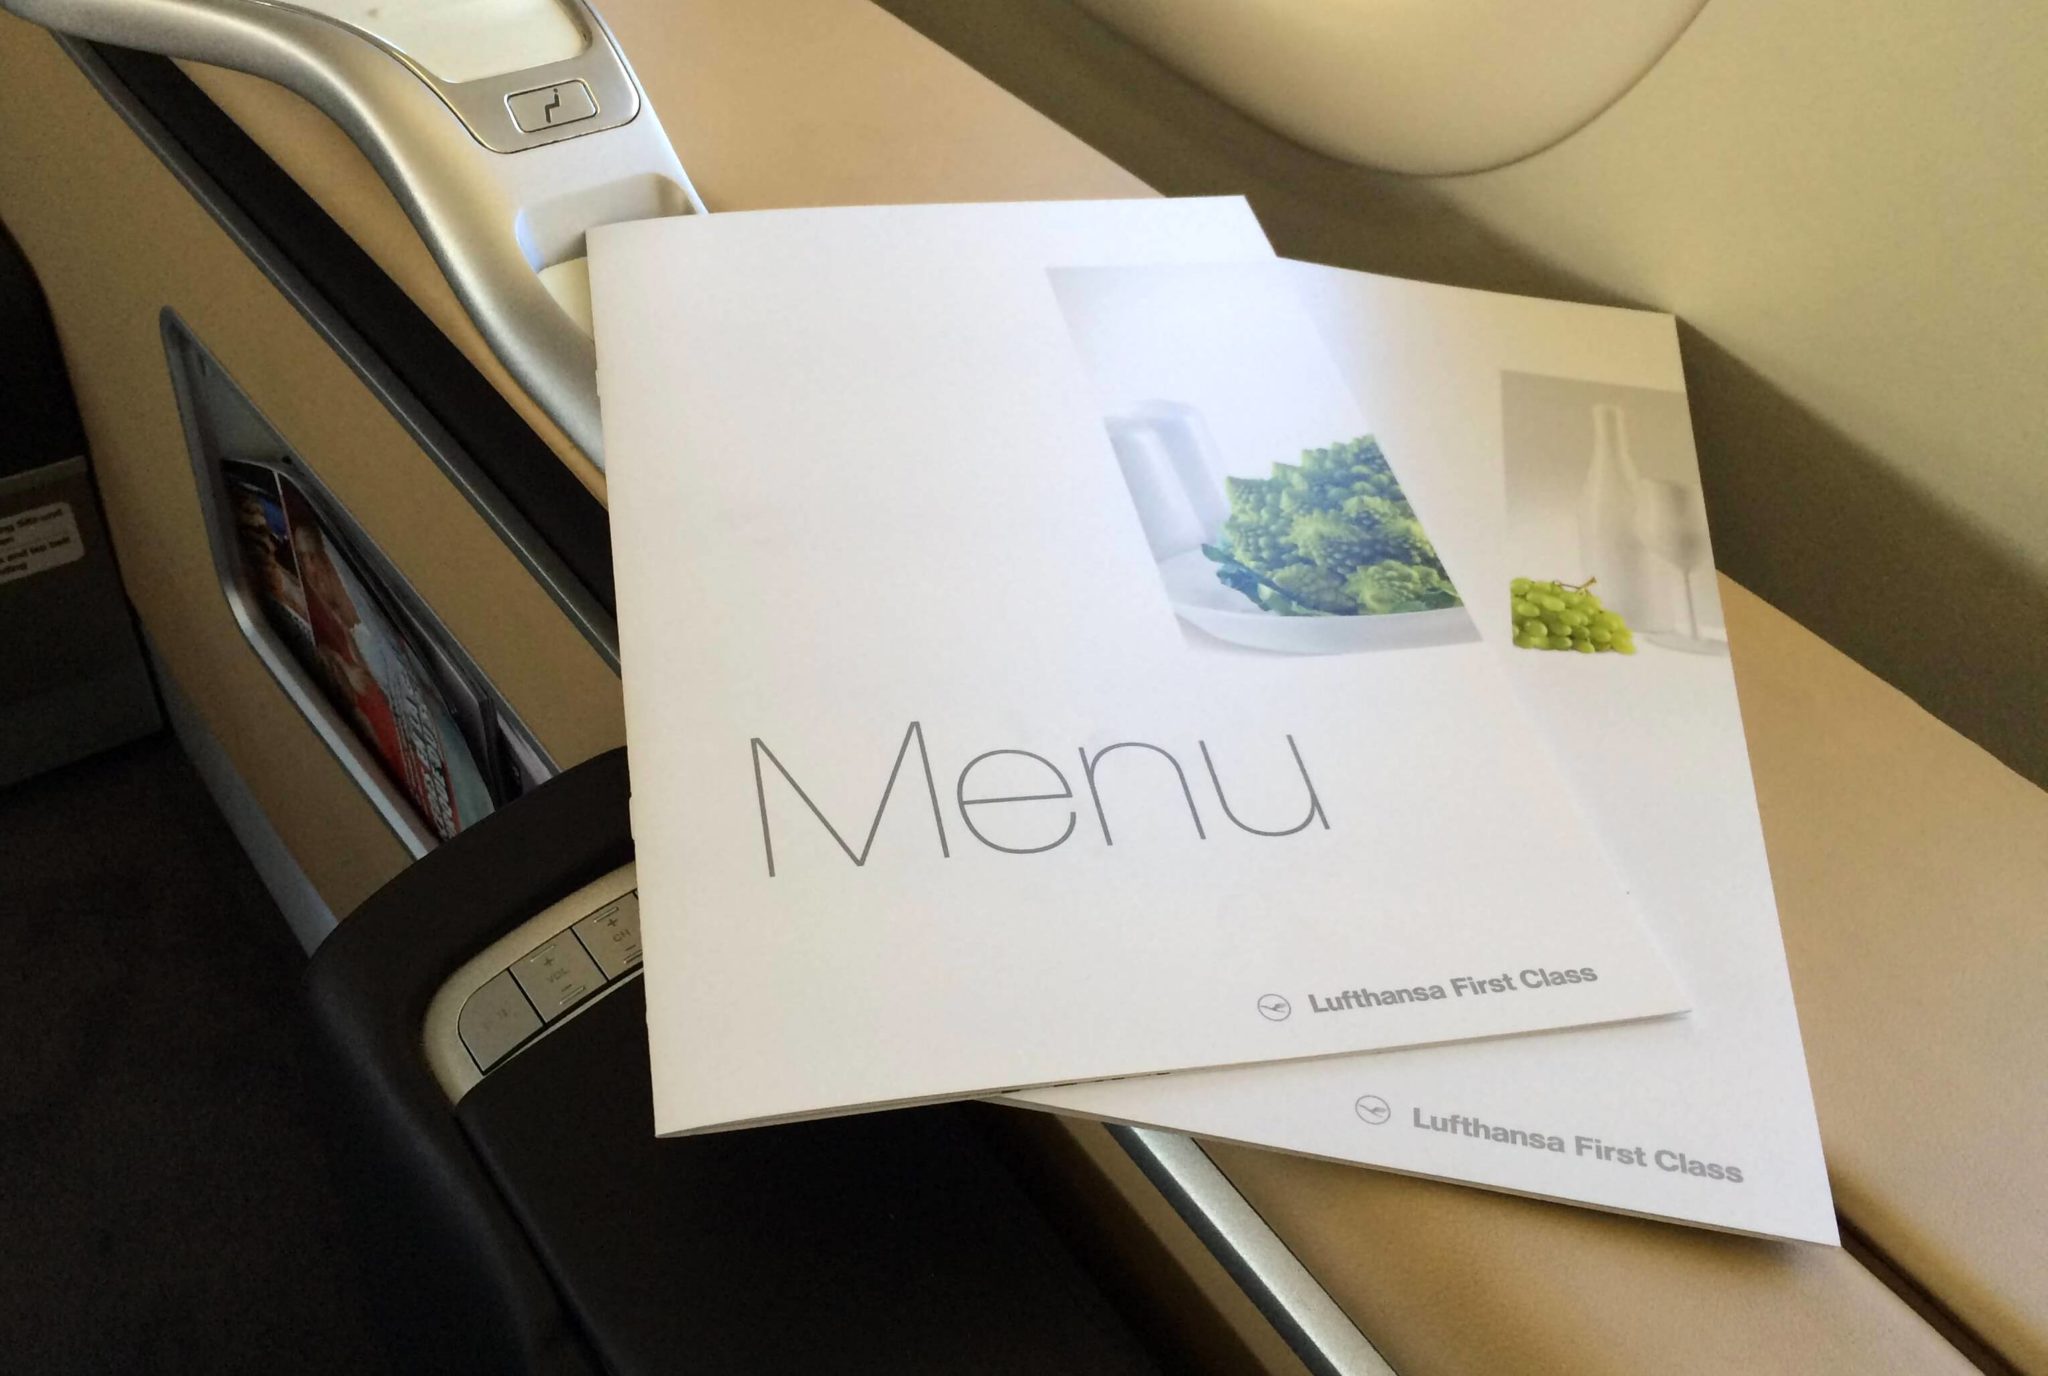 Menú y carta de vinos, Lufthansa first class